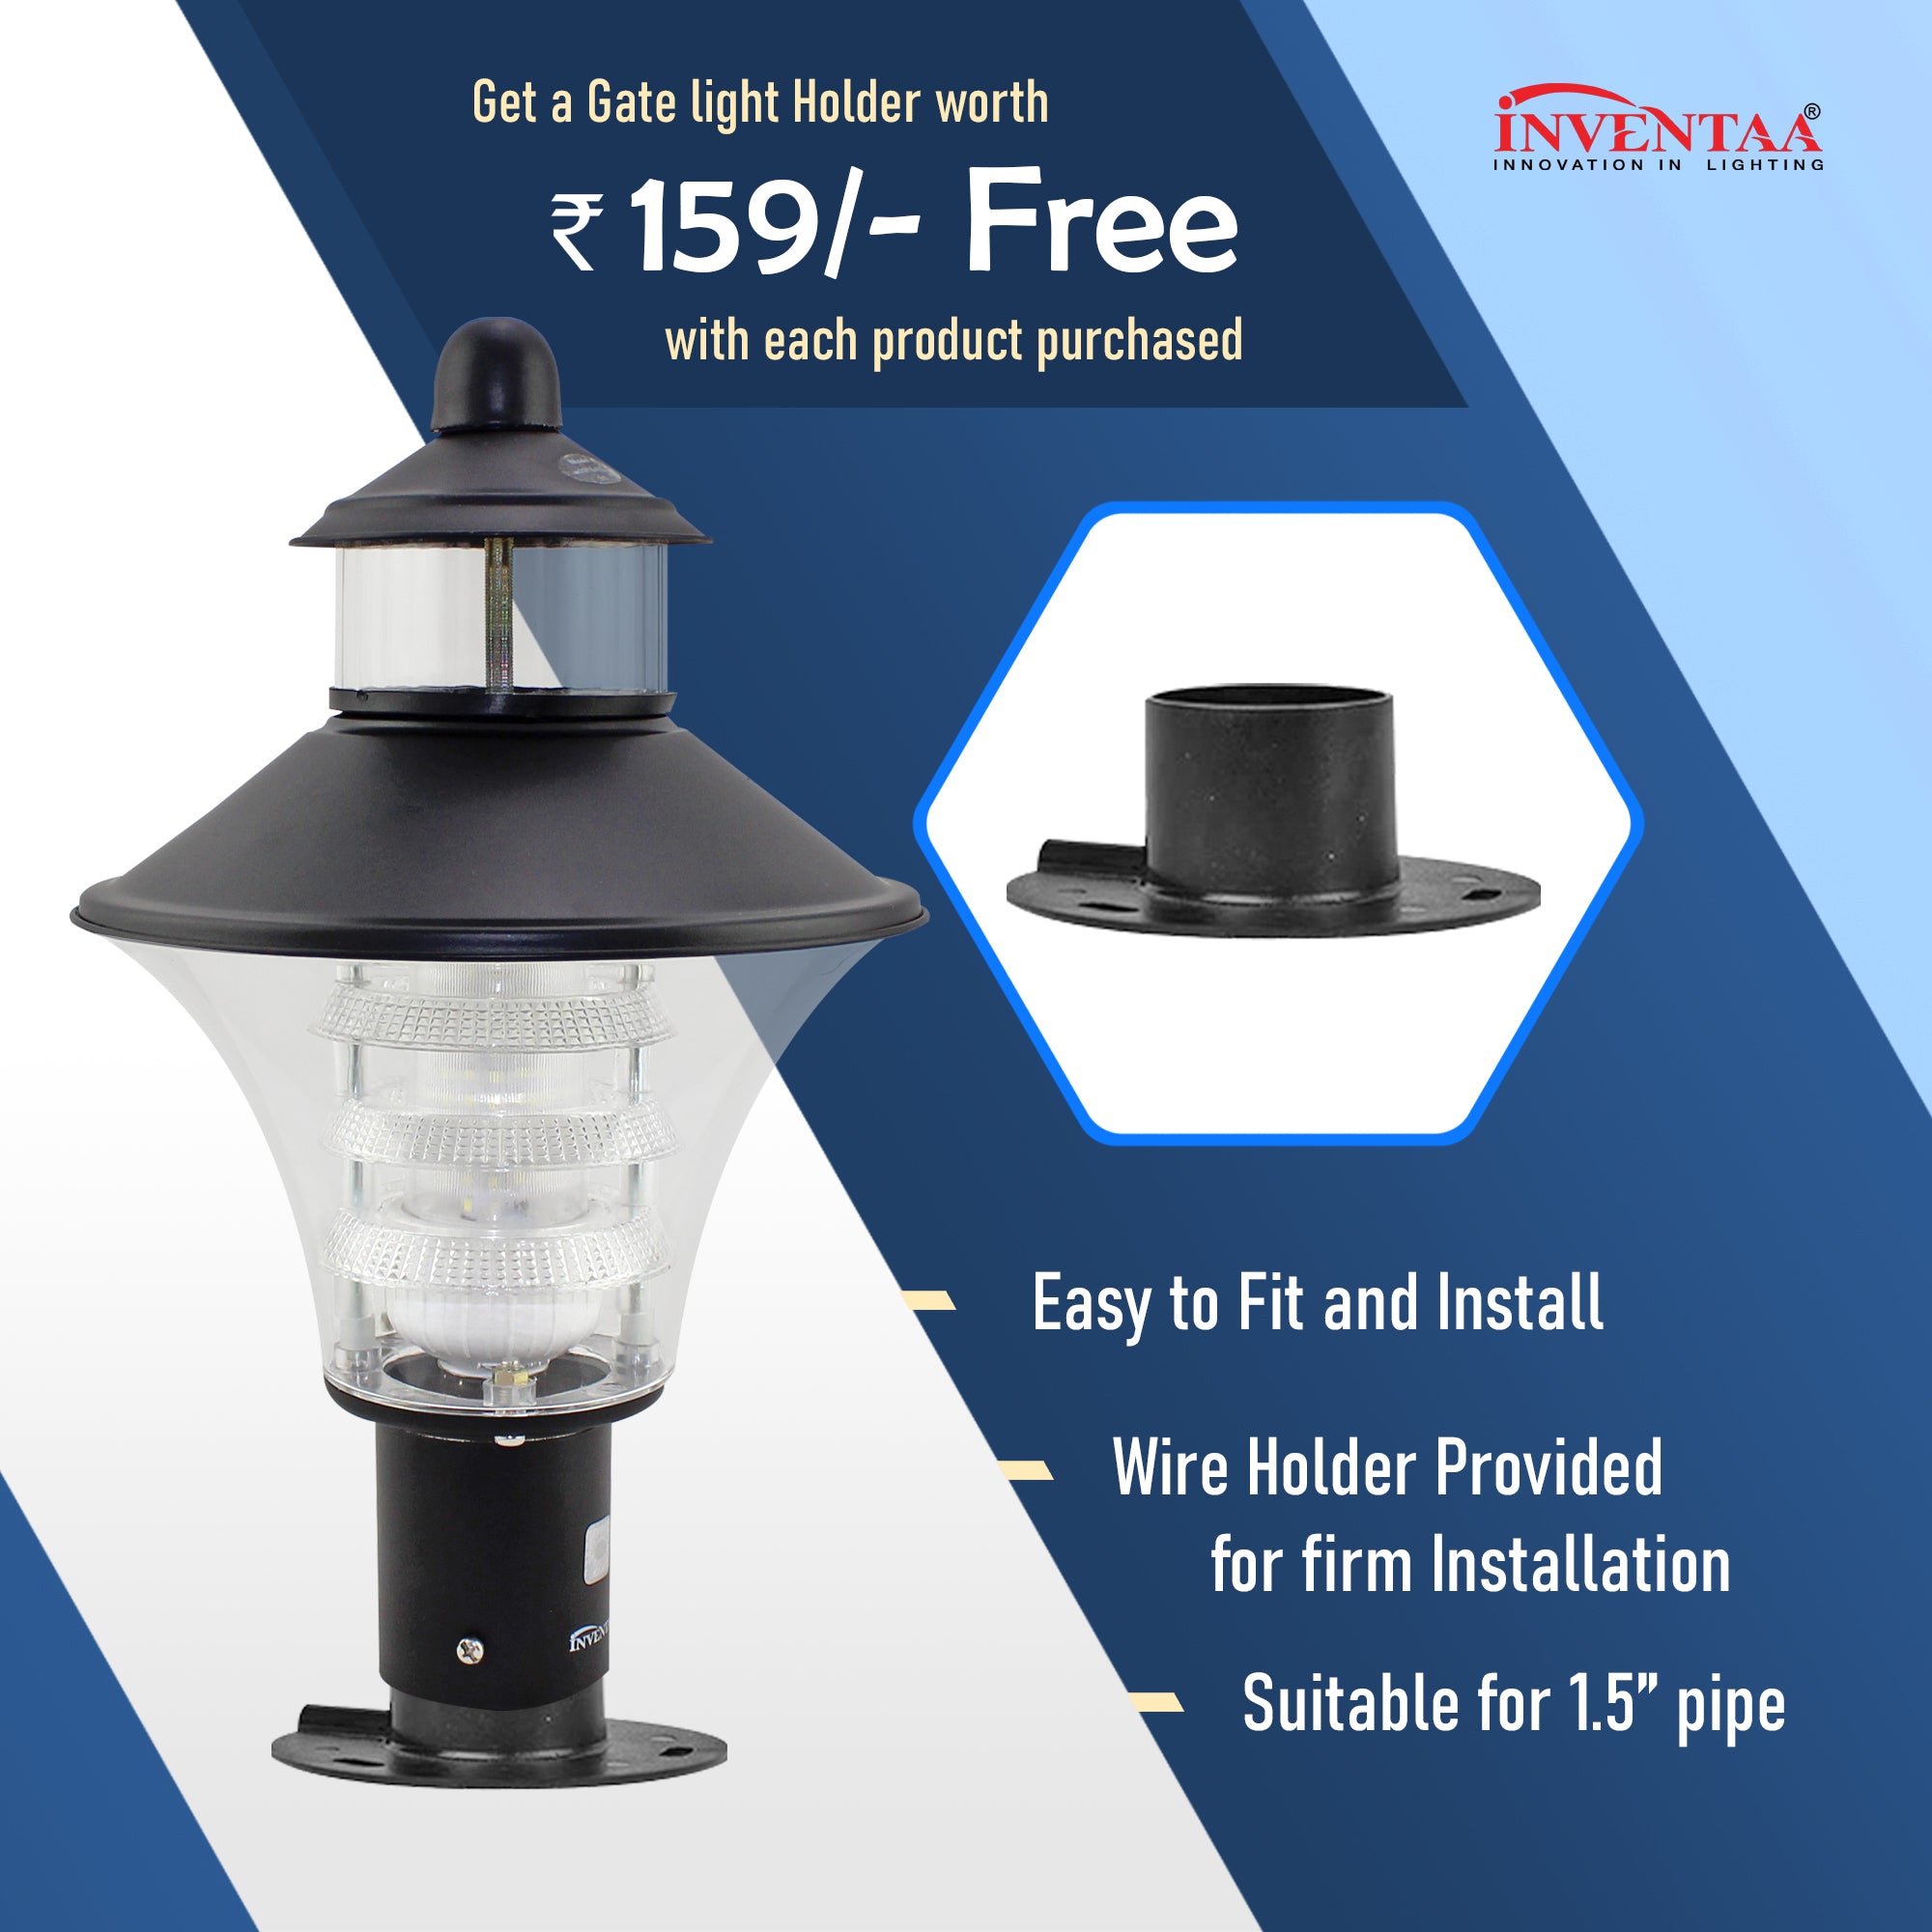 Free LED Gate Light Holder For Optic Fabula LH Silver Satin | Best LED Gate Light Model Online at affordable price Online #color_silver satin clear